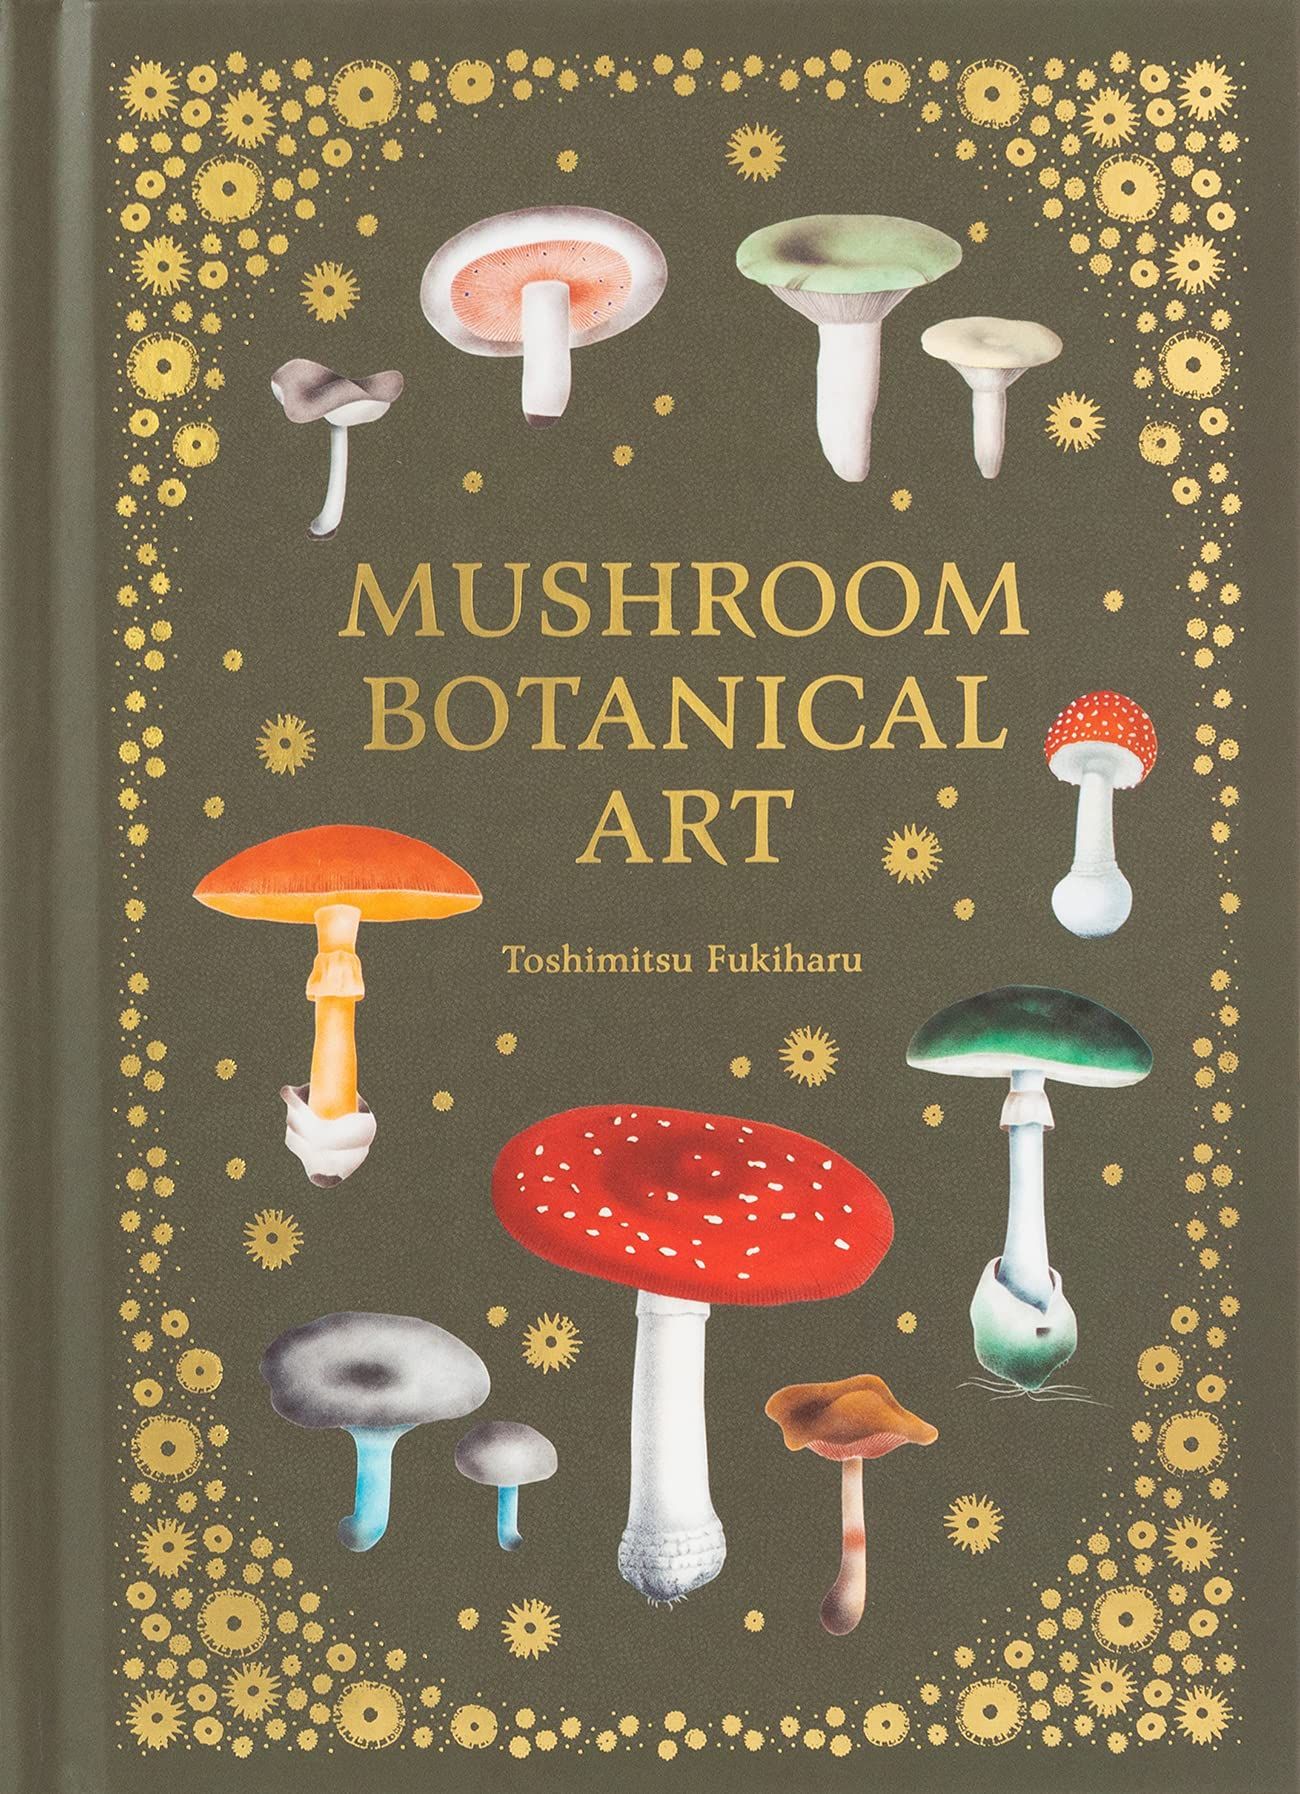 Mushroom Botanical Art book cover